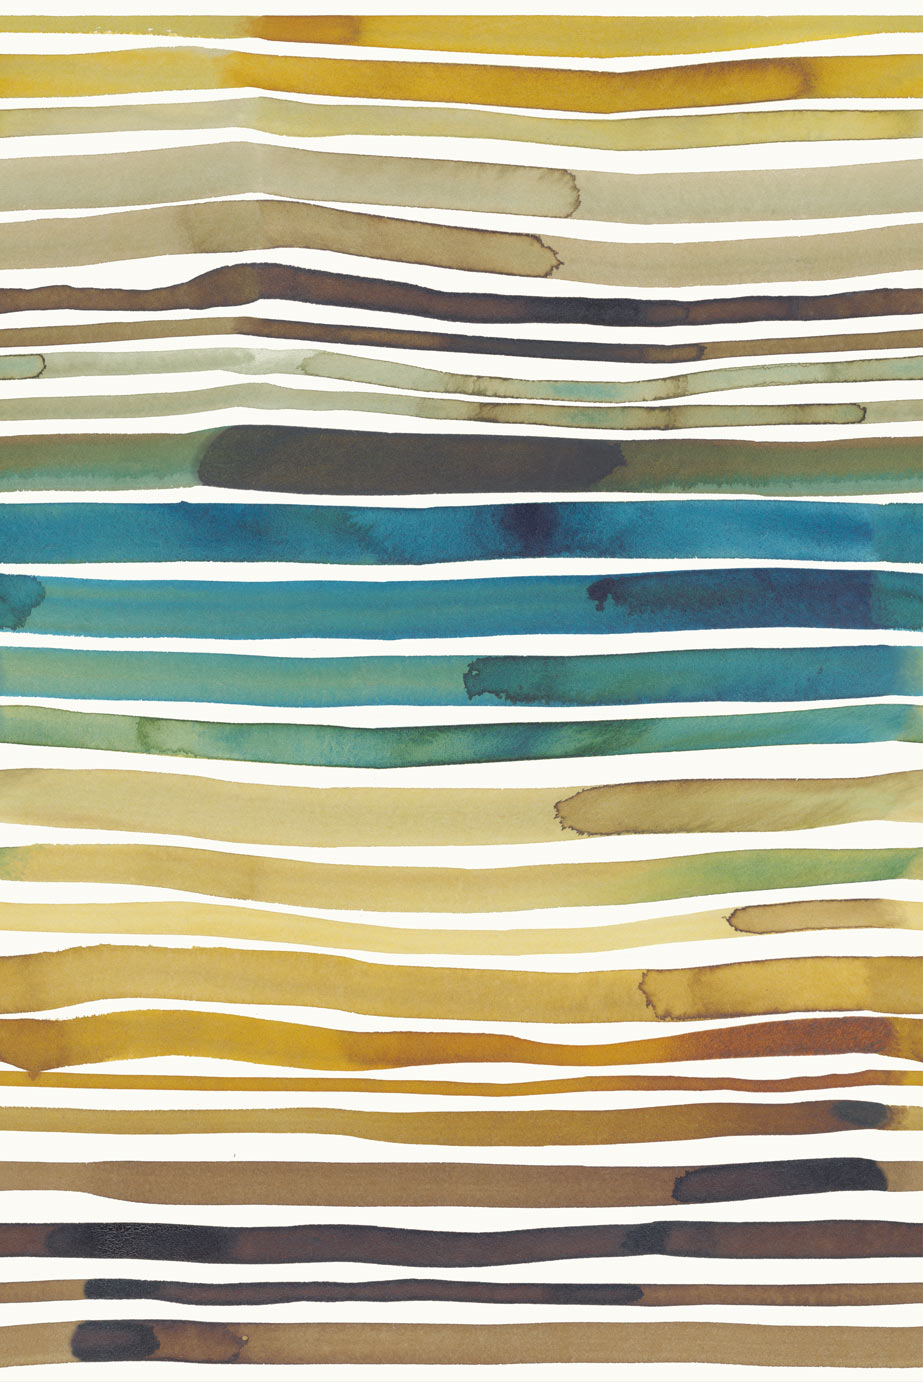 Stripes+ Aquastripe mural